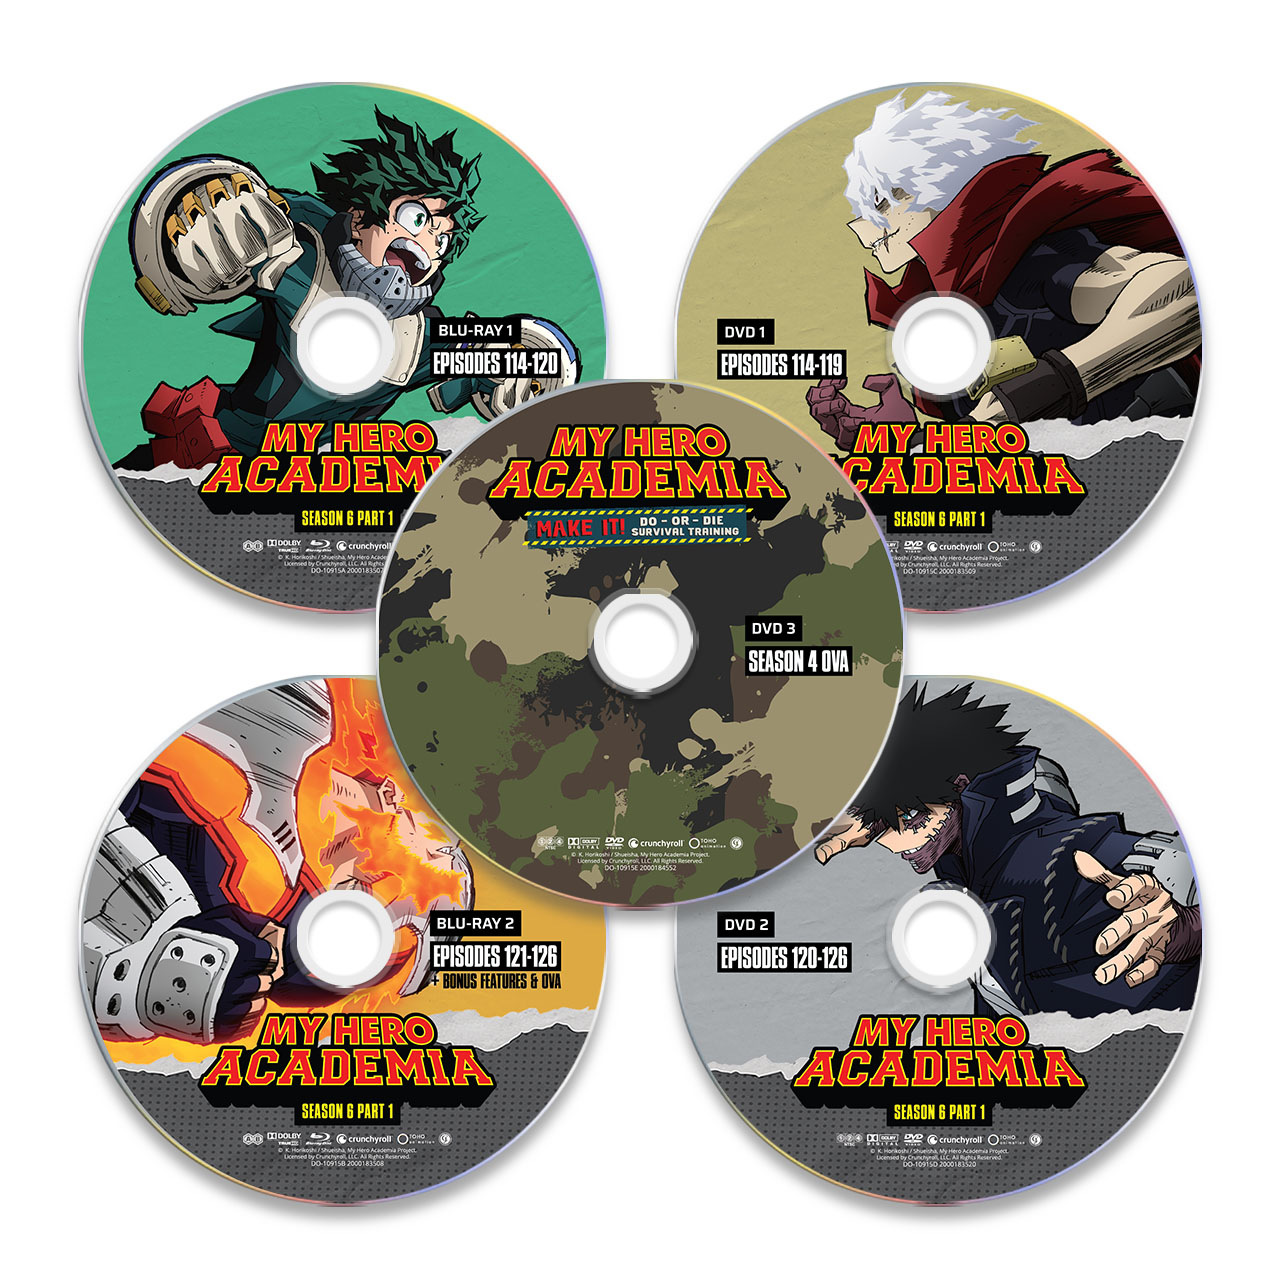 My Hero Academia - Season 6 Part 1 - Blu-ray + DVD image count 5